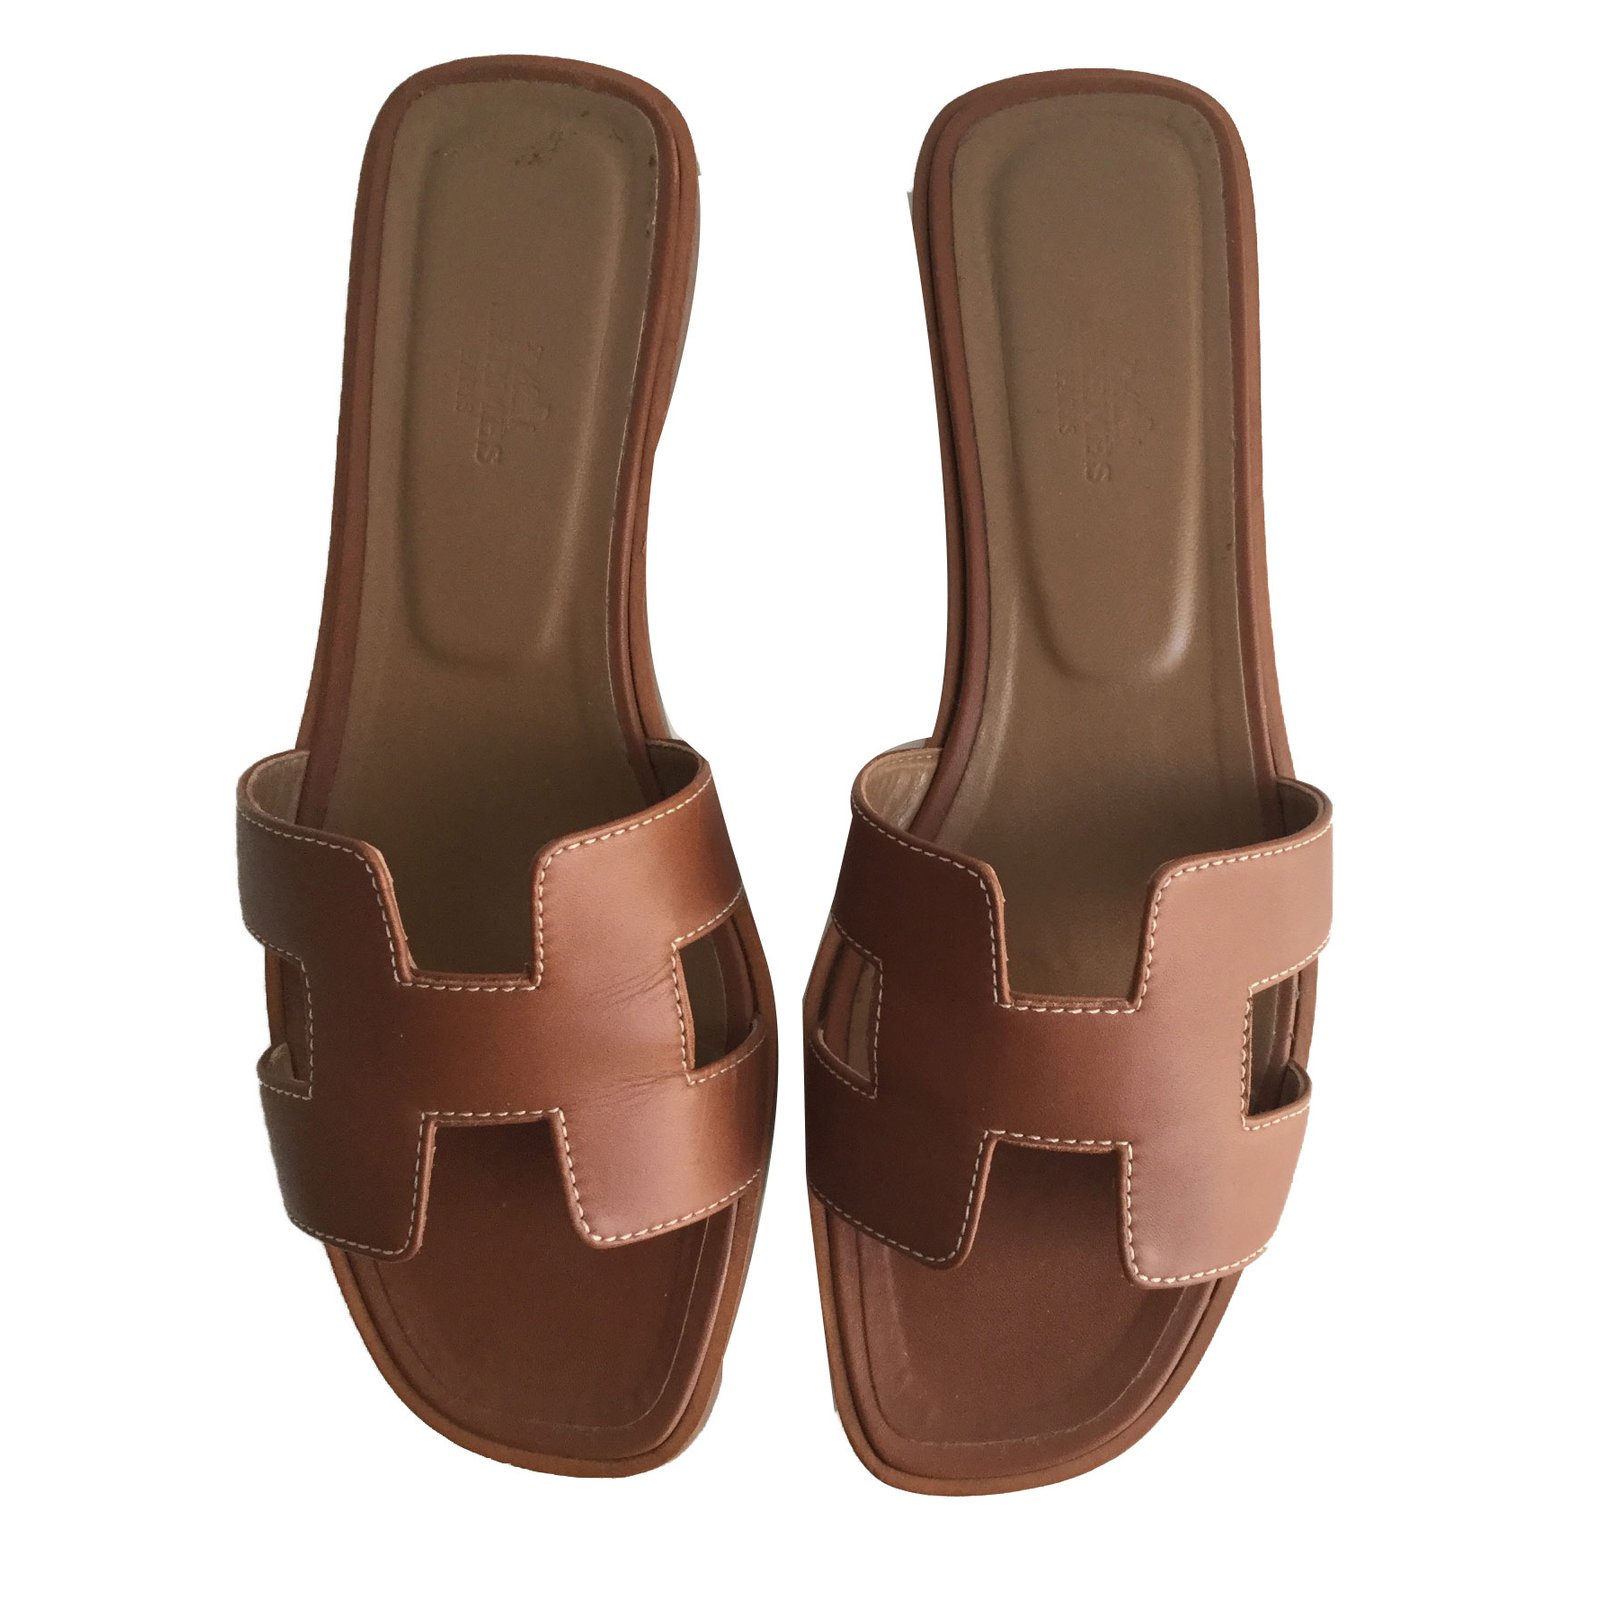 Hermès Oran Sandals Leather Brown ref 